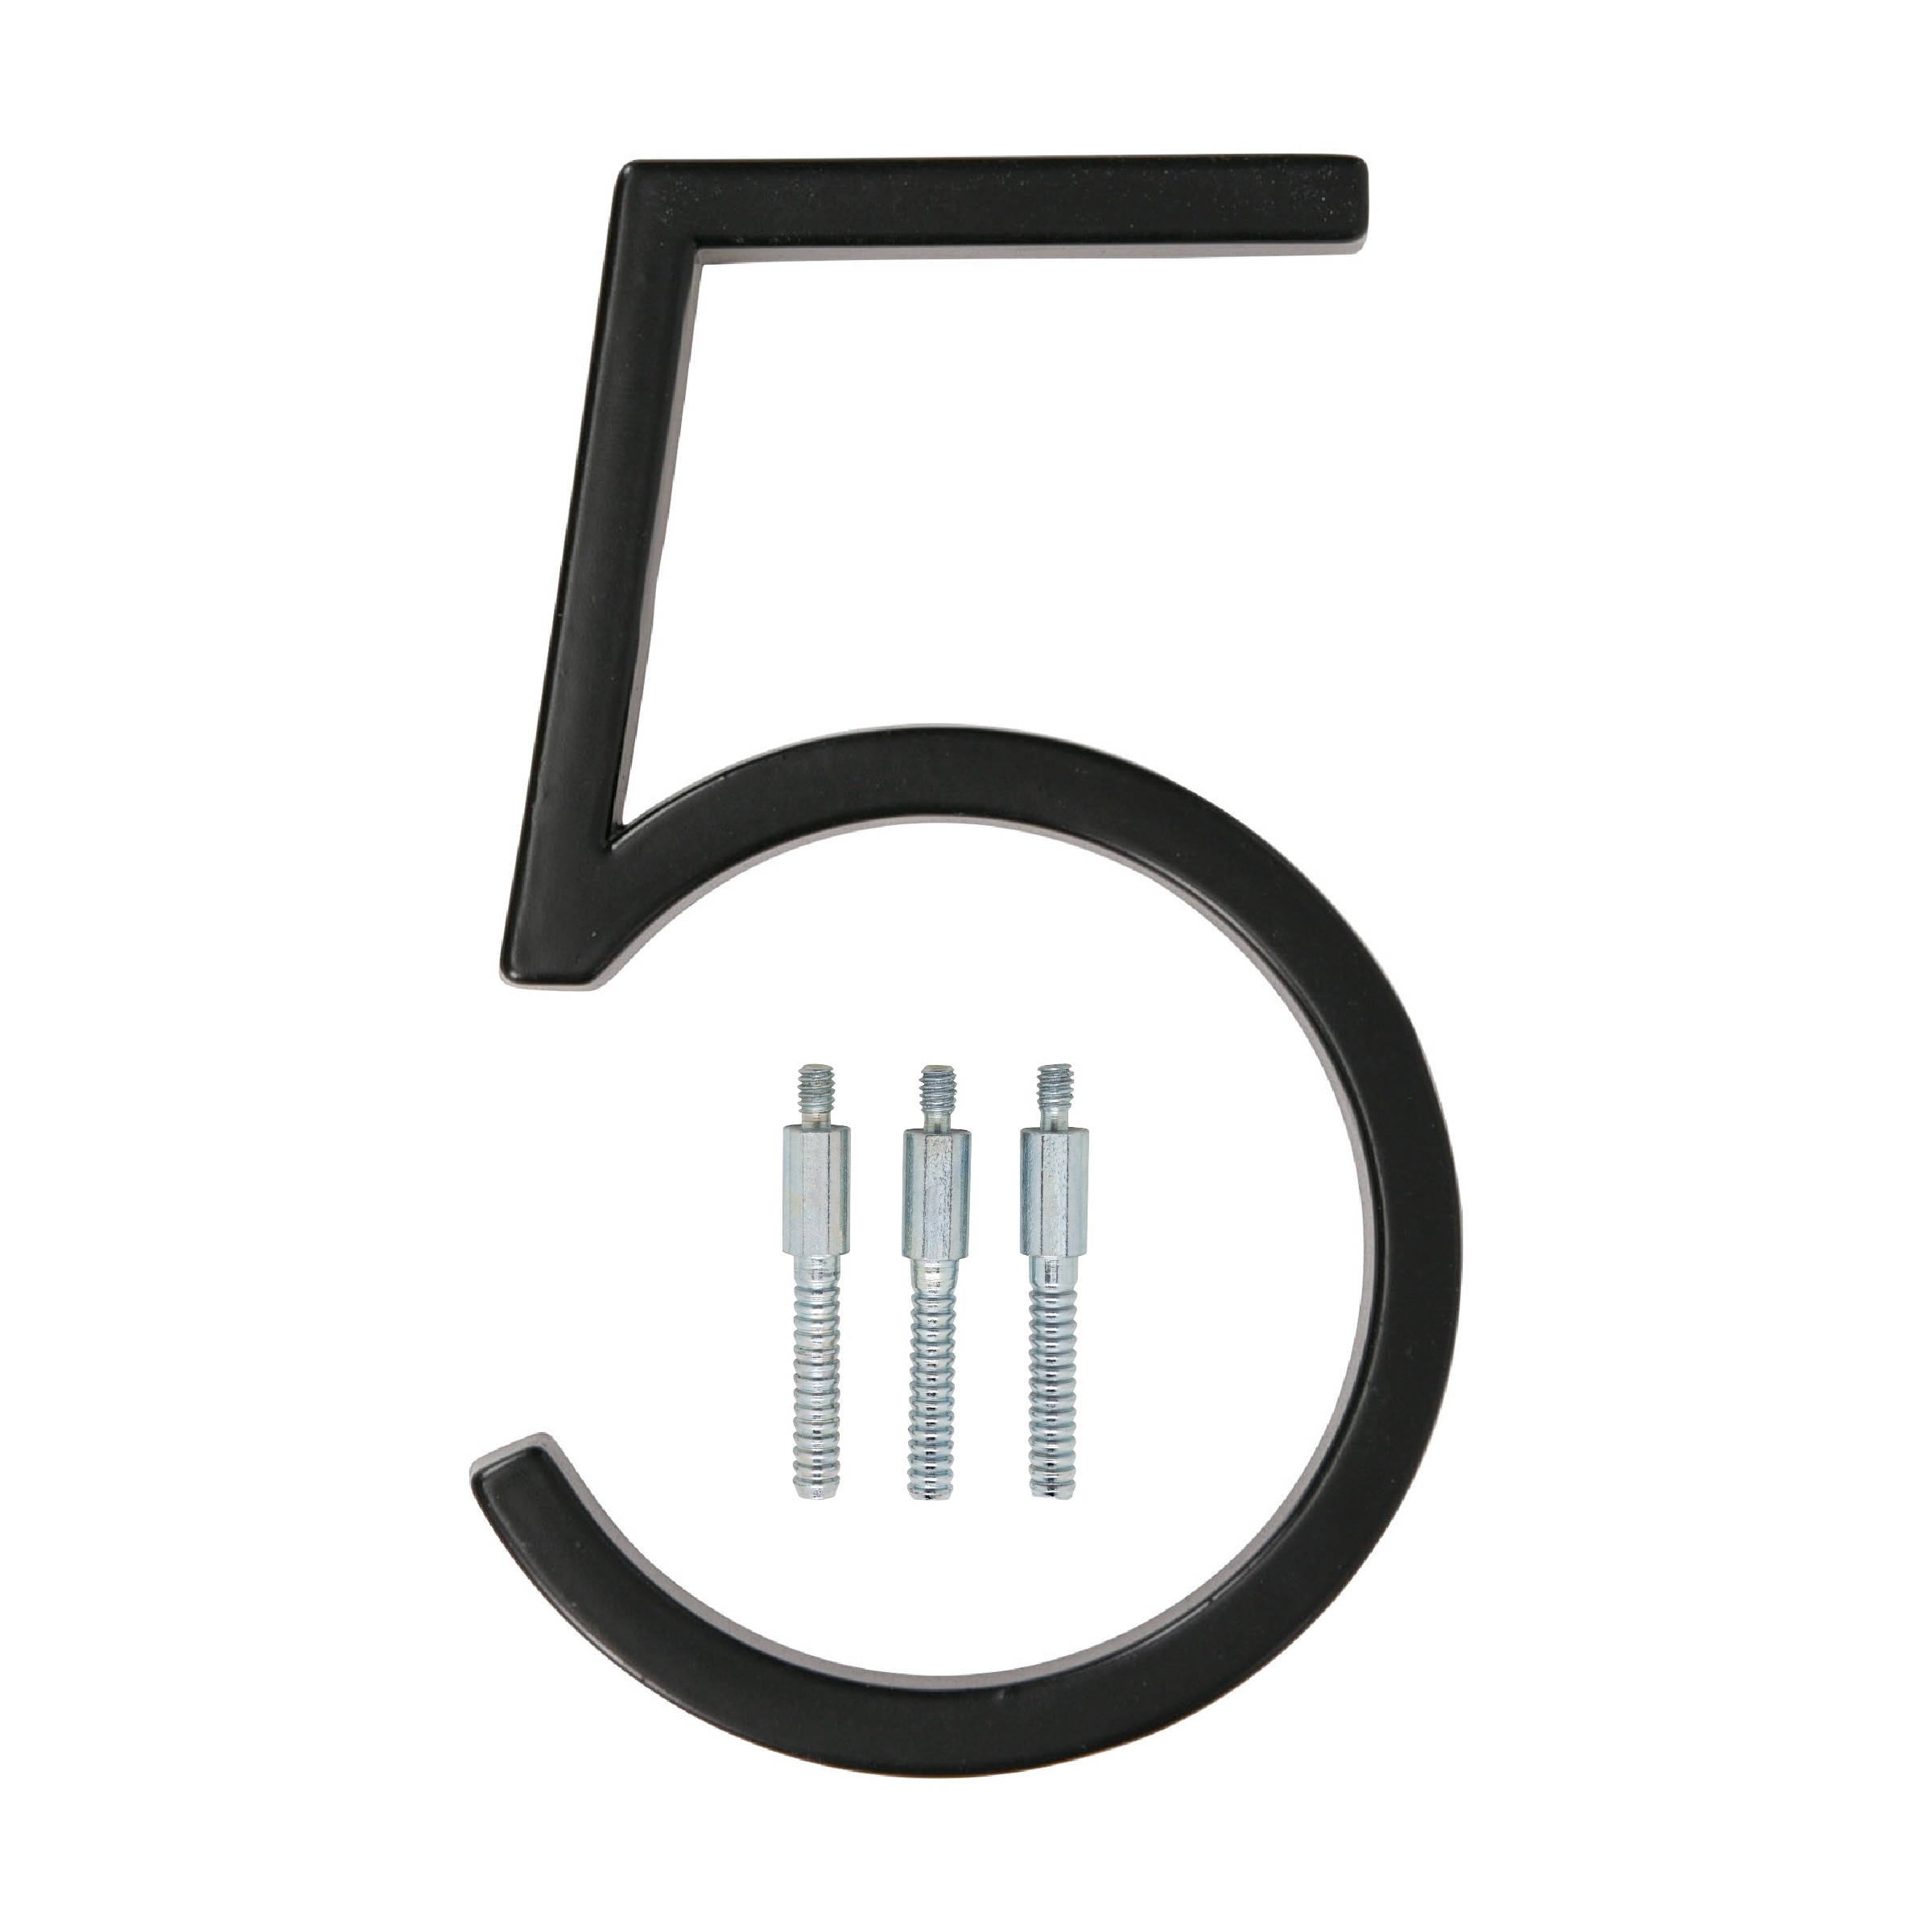 Black Safety Pins-assorted Sizes 40/pkg (30 Size 1/ 5 Size 2 / 5 Size 3)